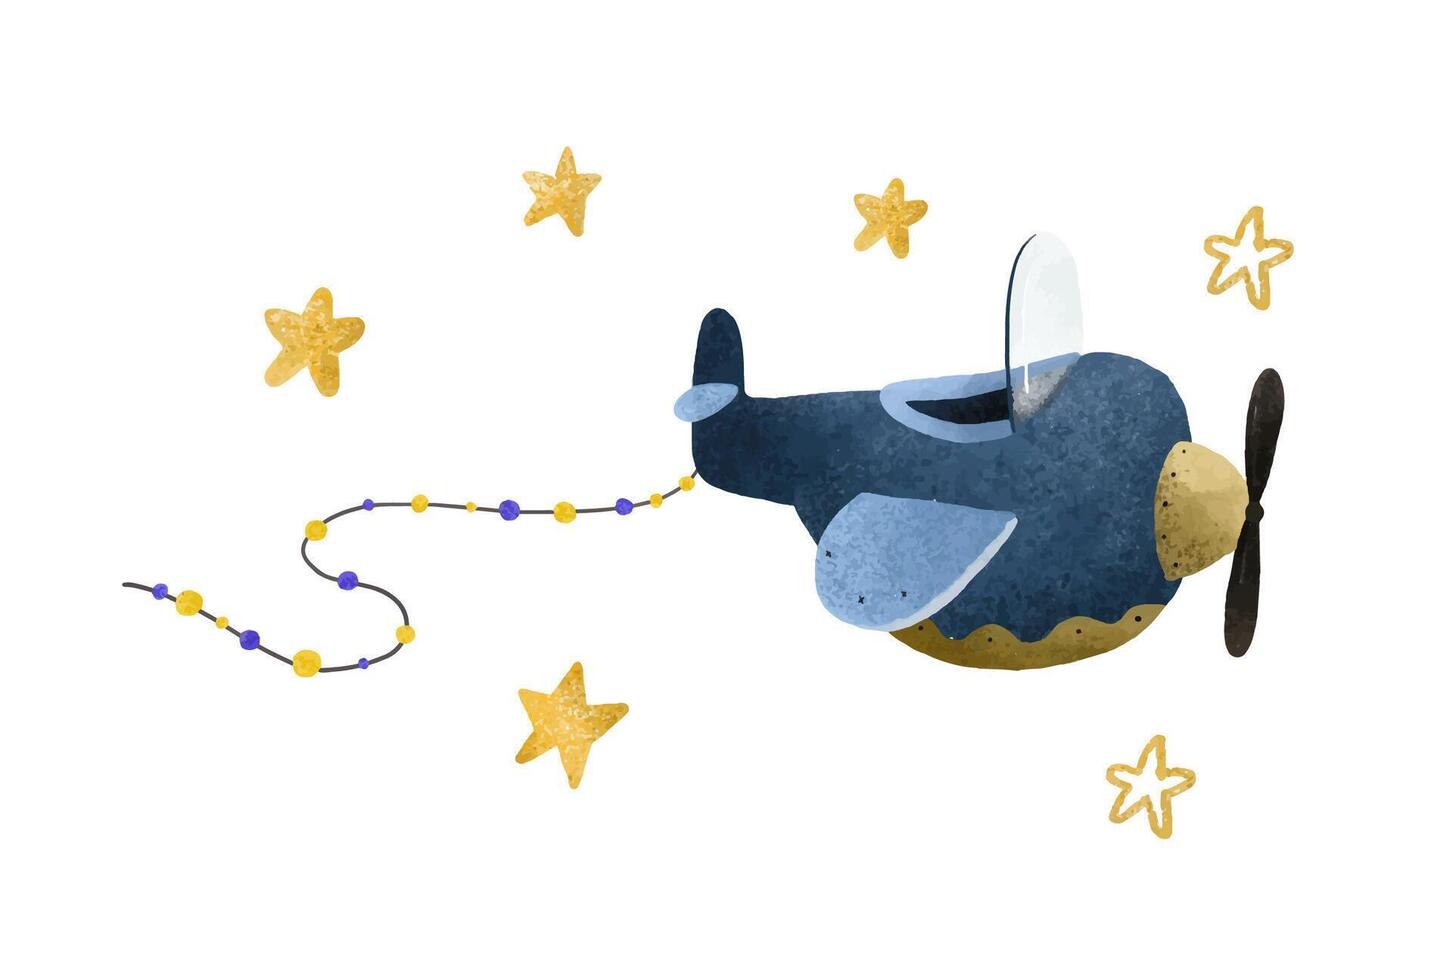 Cartoon air transport. Pane, airplane, airship,  aircraft. Cildren toy planes set. Boy illustration. Decor for nursery, clothes, textile, stickers vector